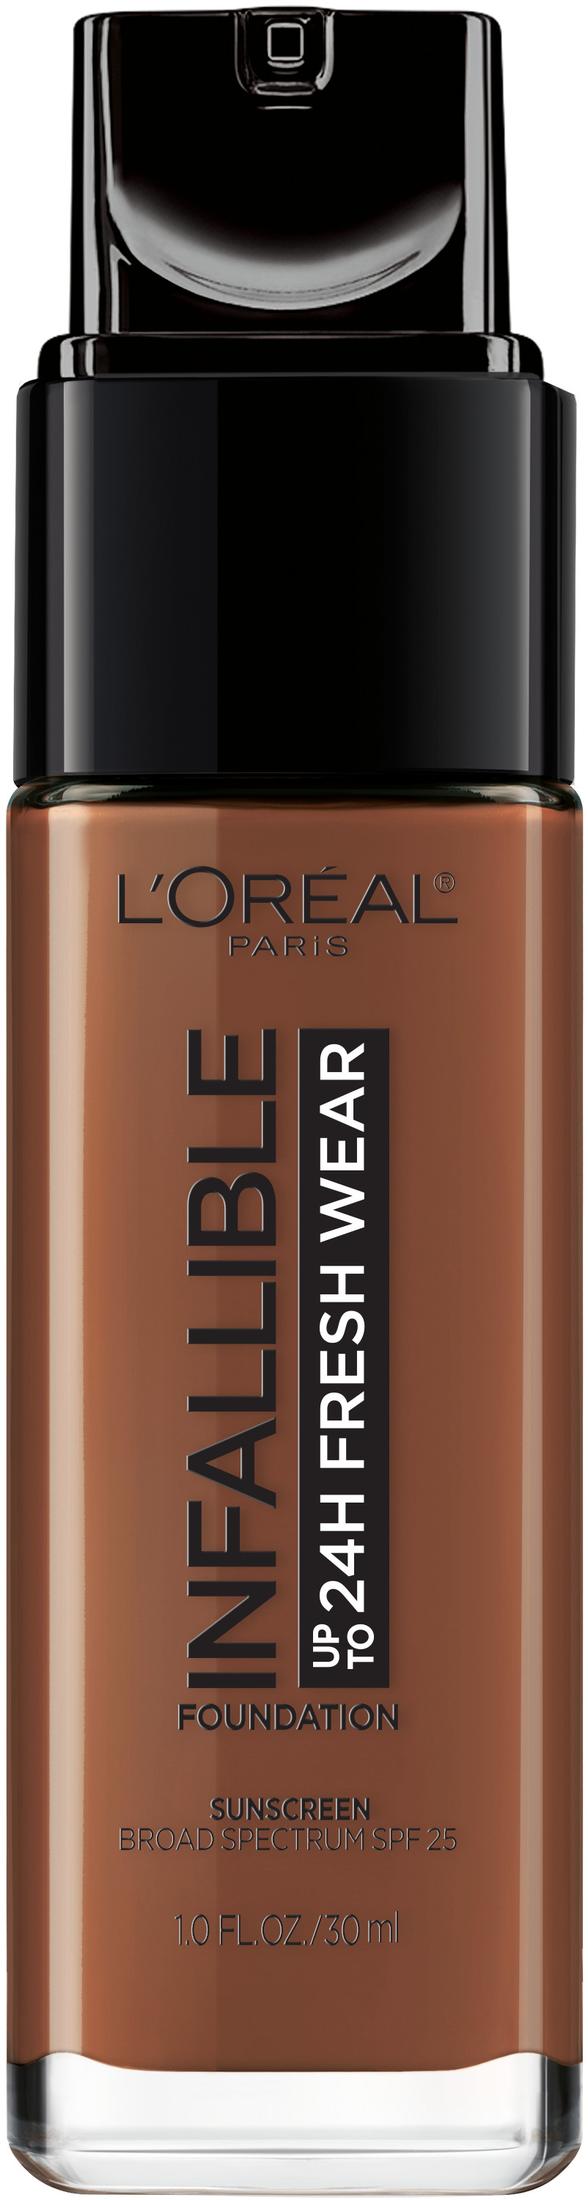 L'Oreal Paris Infallible Fresh Wear 24 Hr Liquid Foundation Makeup, 530 Deep Amber, 1 fl oz - image 3 of 12